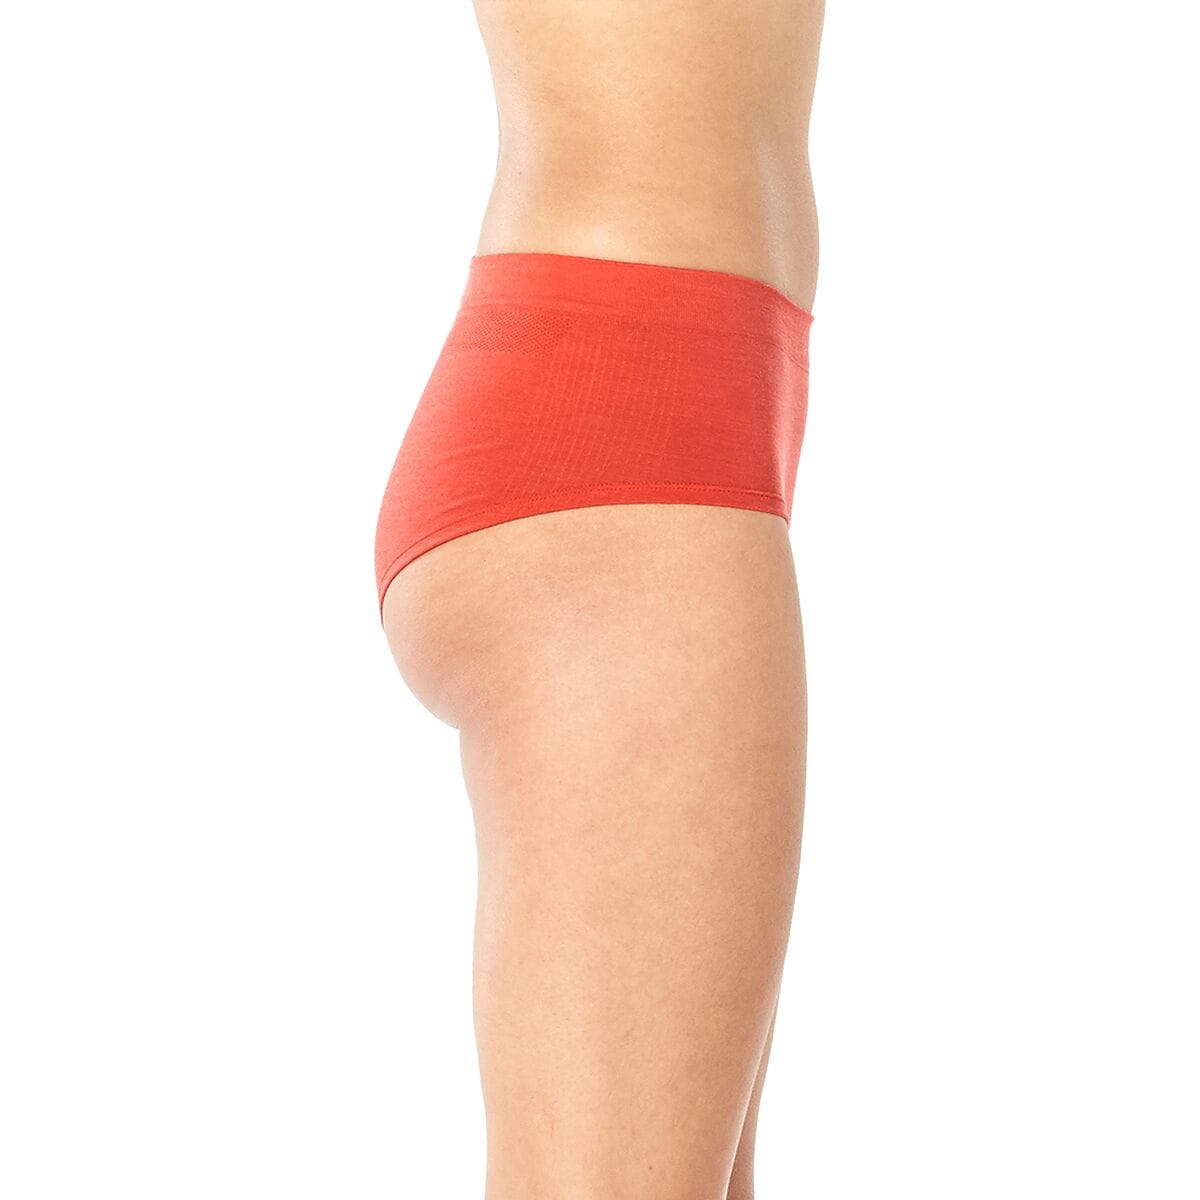 Icebreaker Anatomica Seamless Sport Hipkini Underwear - Women's